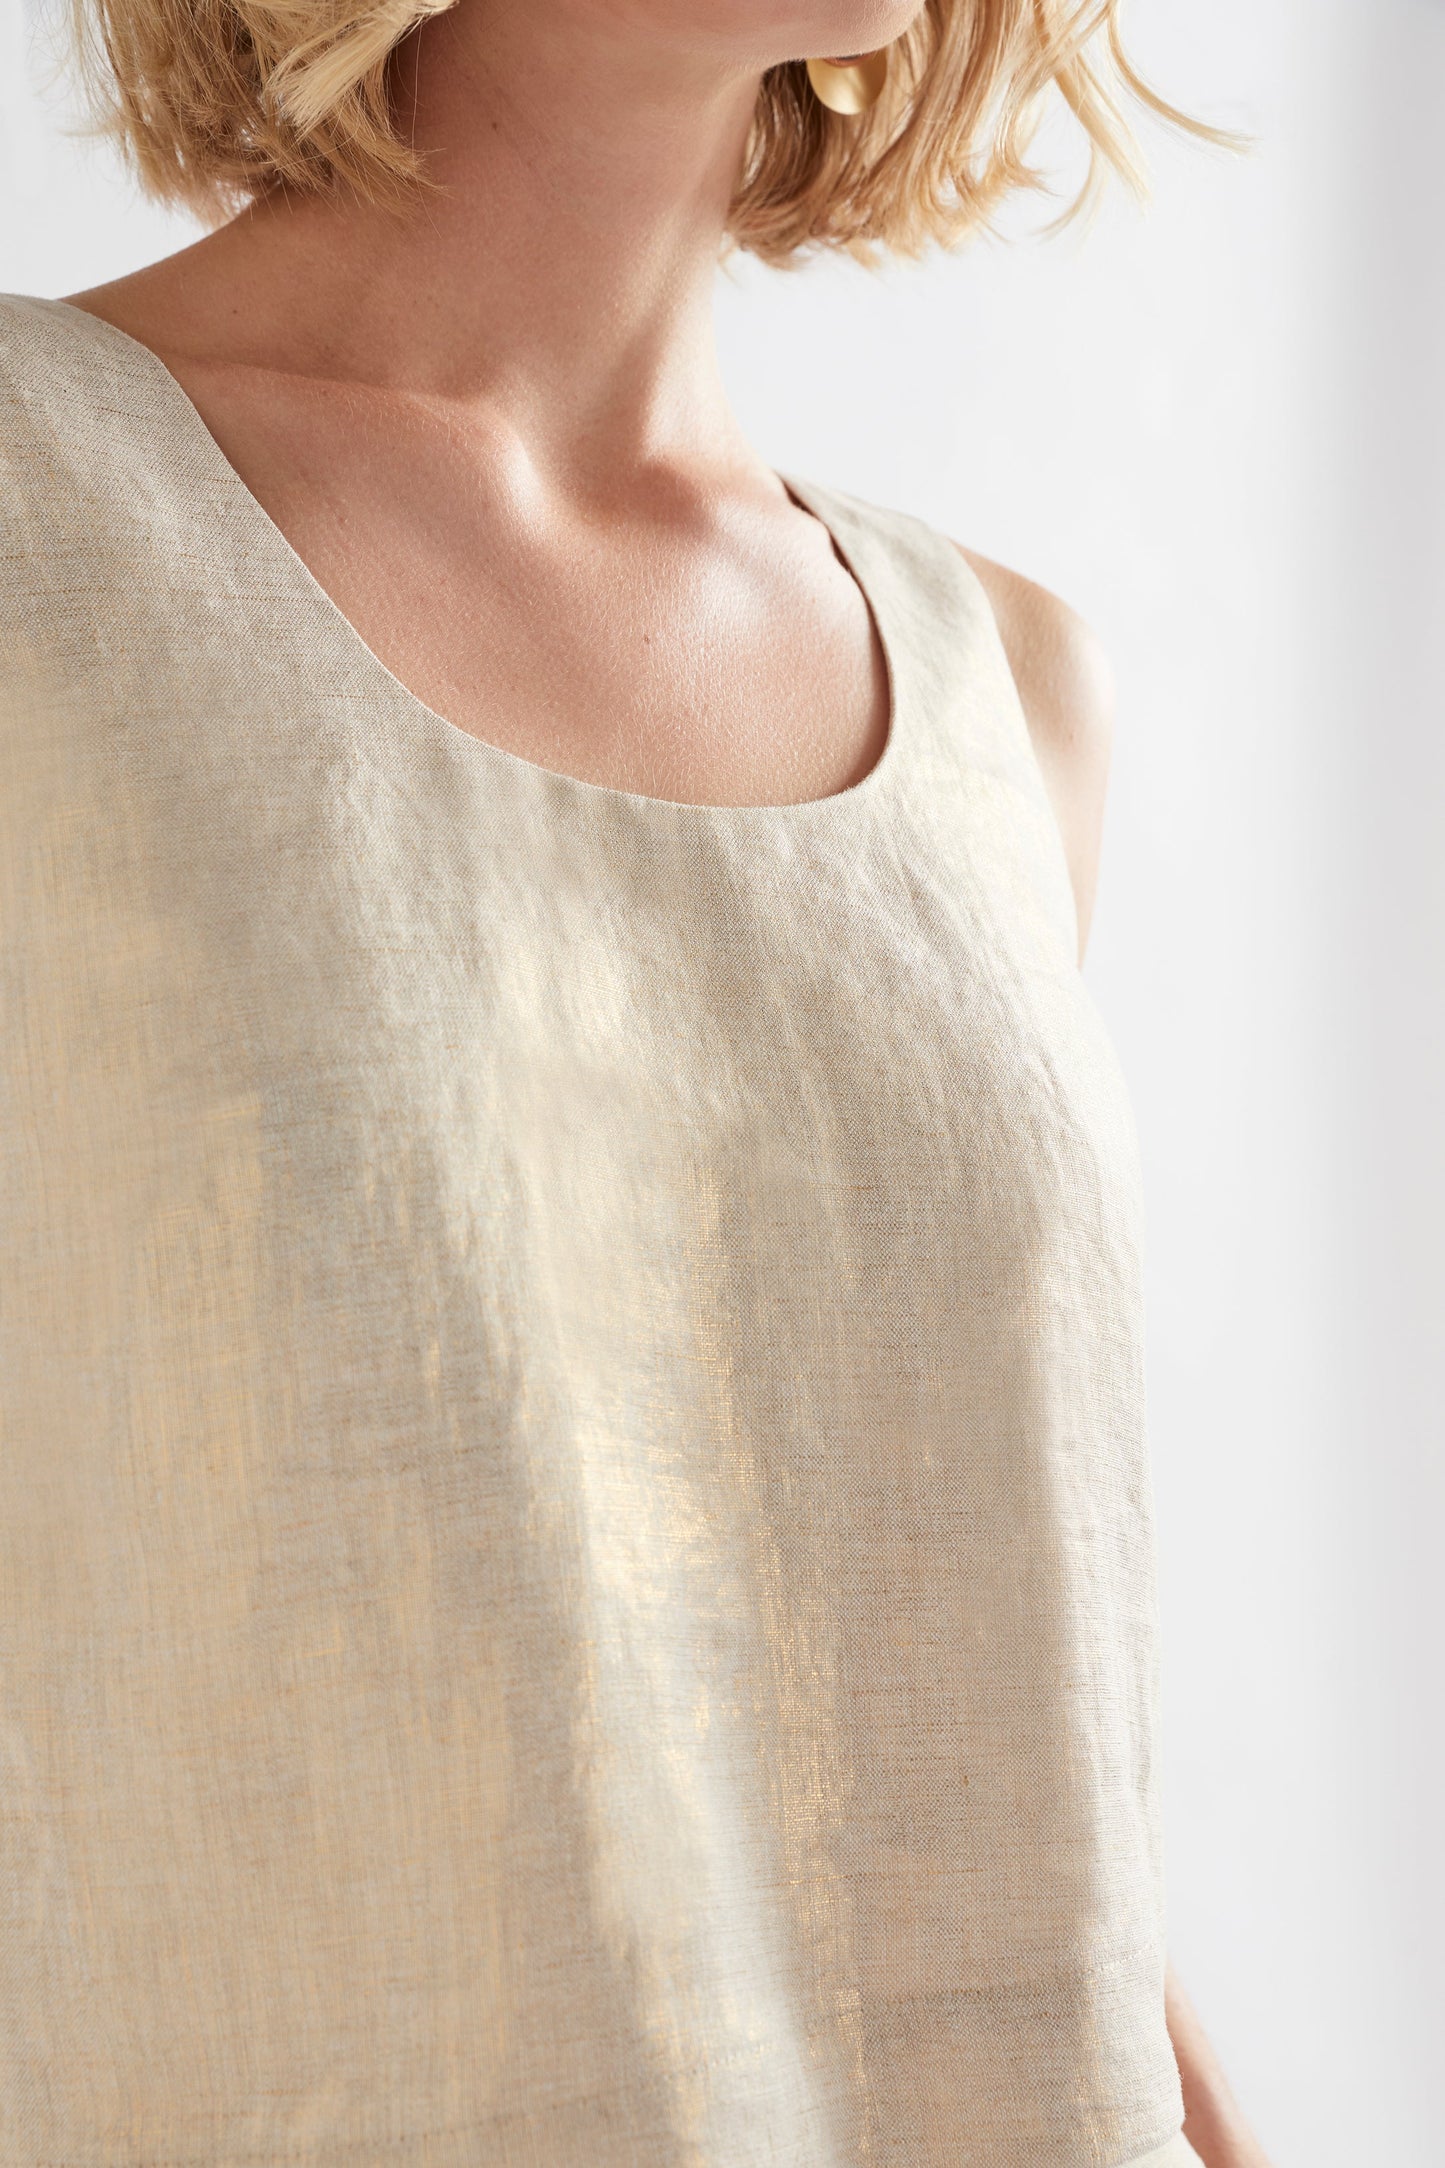 Metalen Gold Foil Linen Cropped Tank Top Model Front texture detail | GOLD LINEN